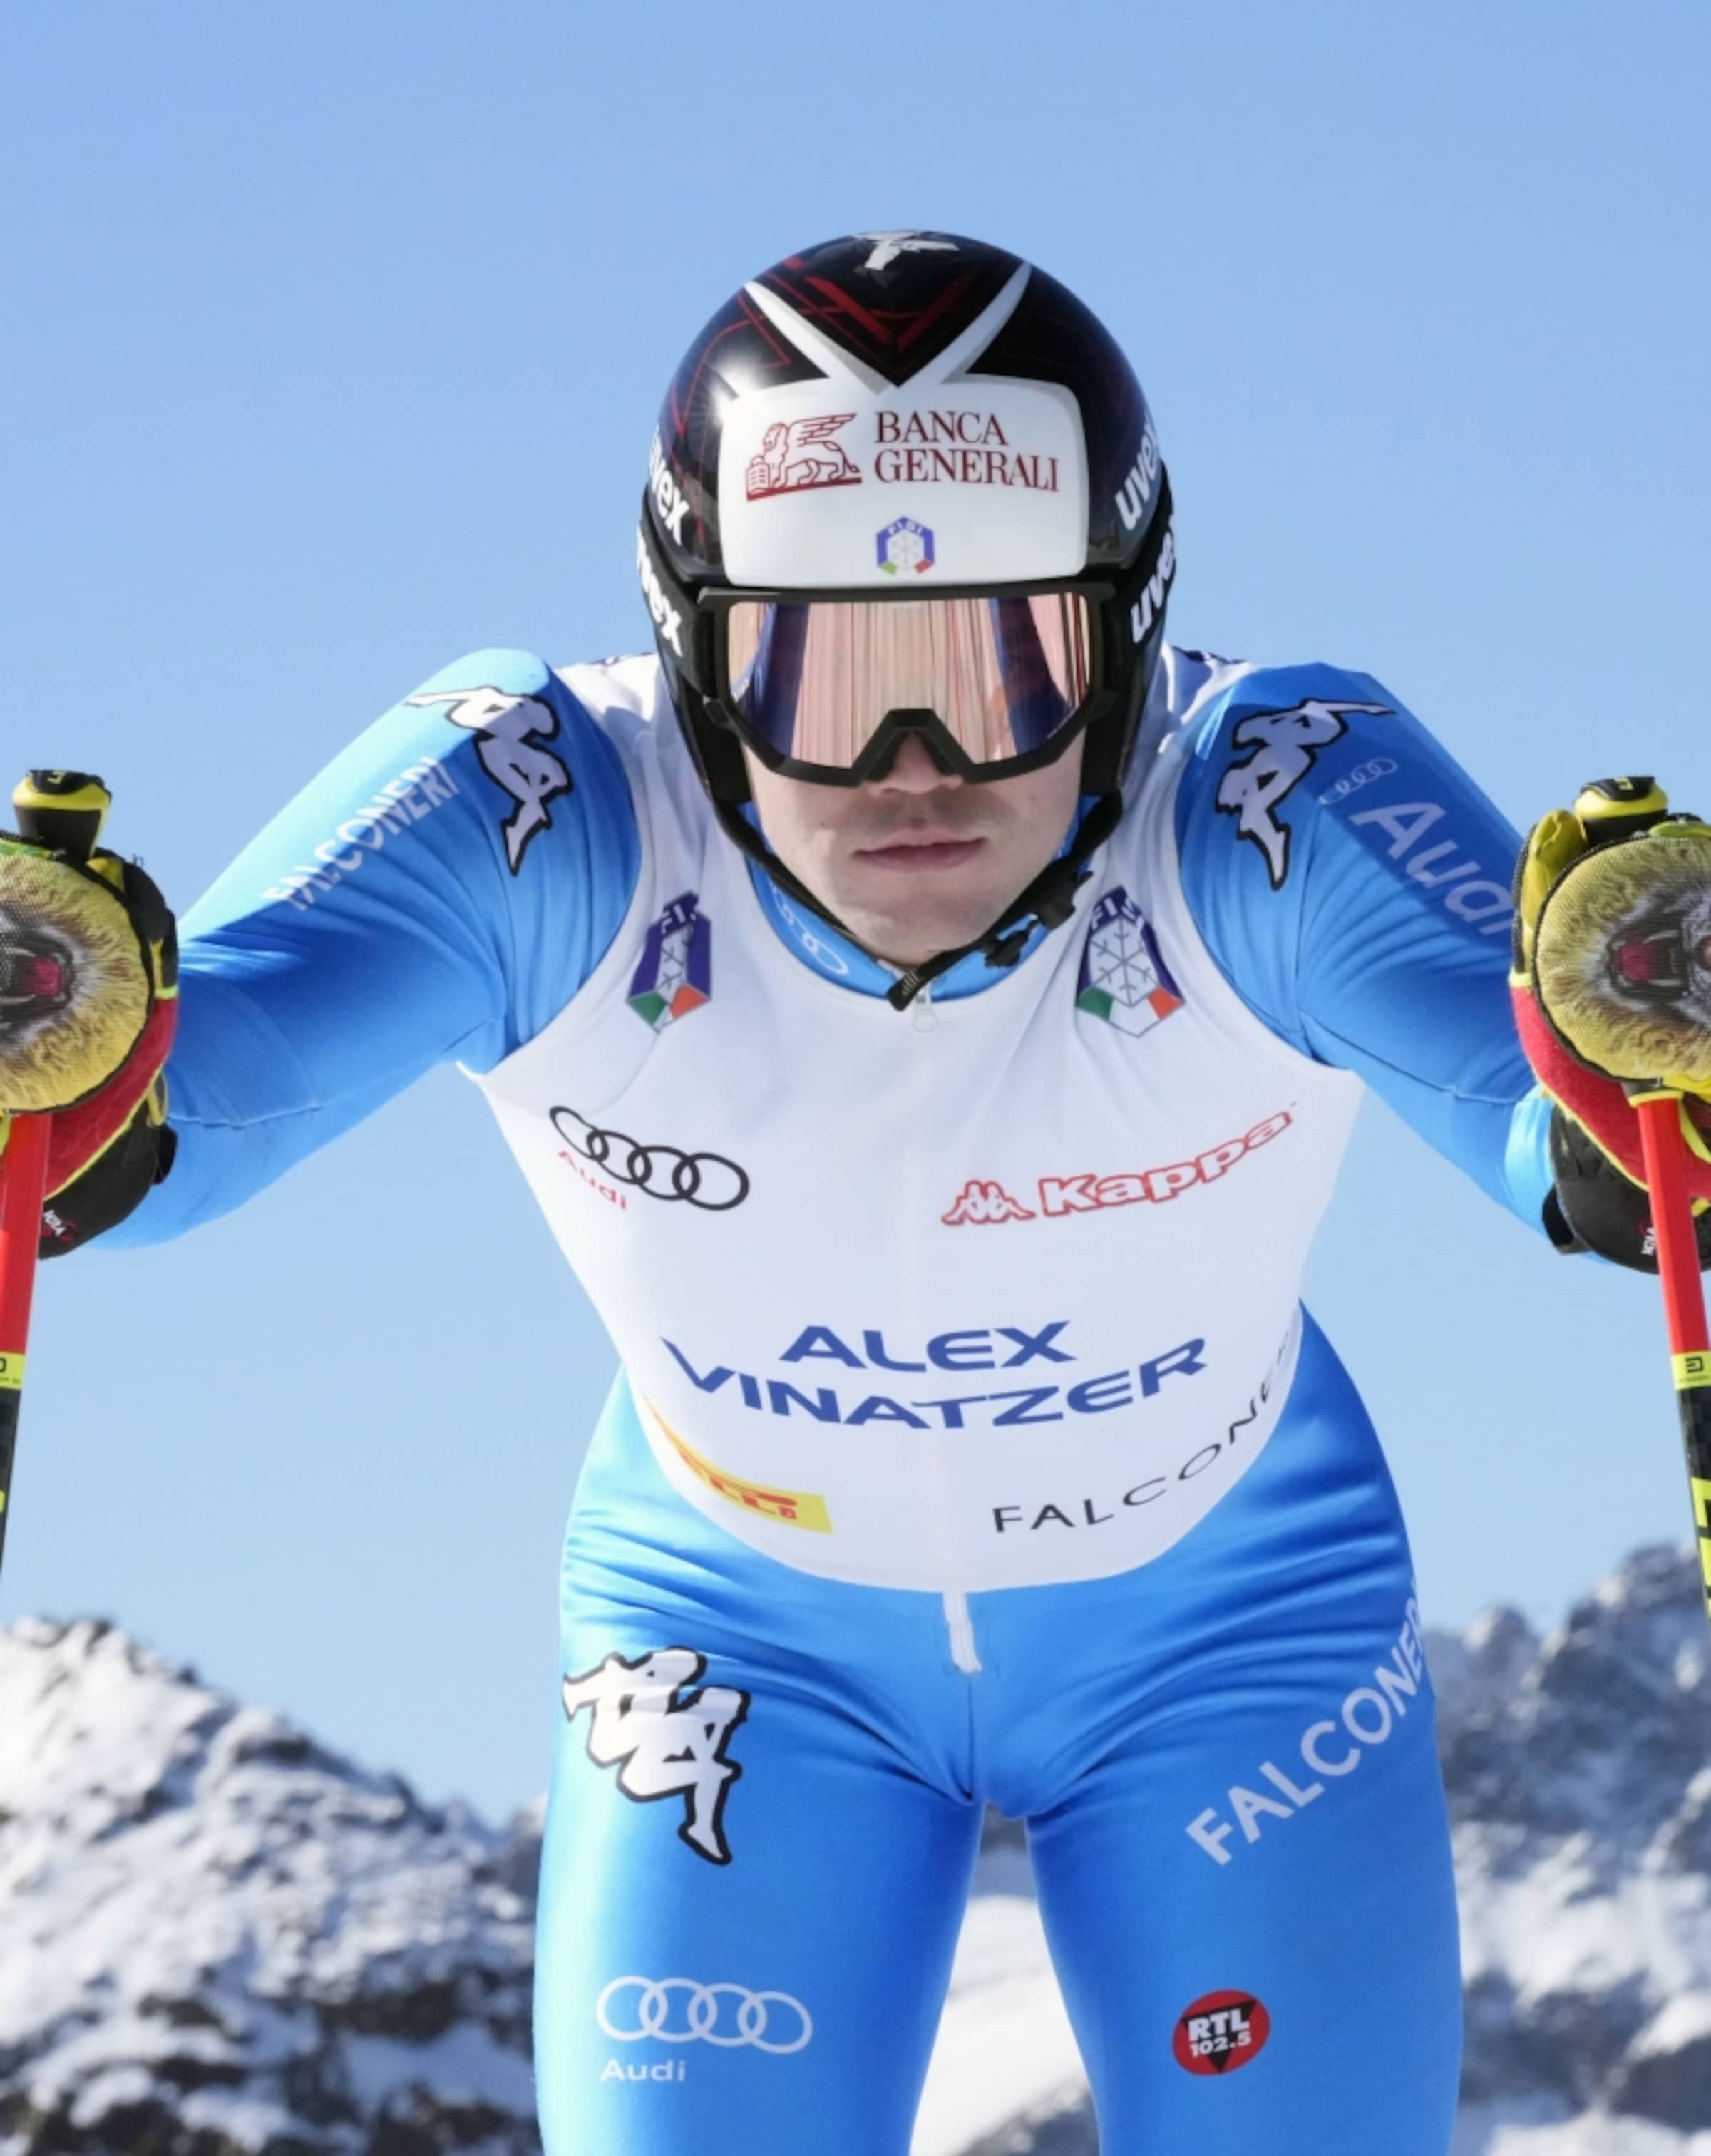 Longines Ski Ambassador Alex Vinatzer